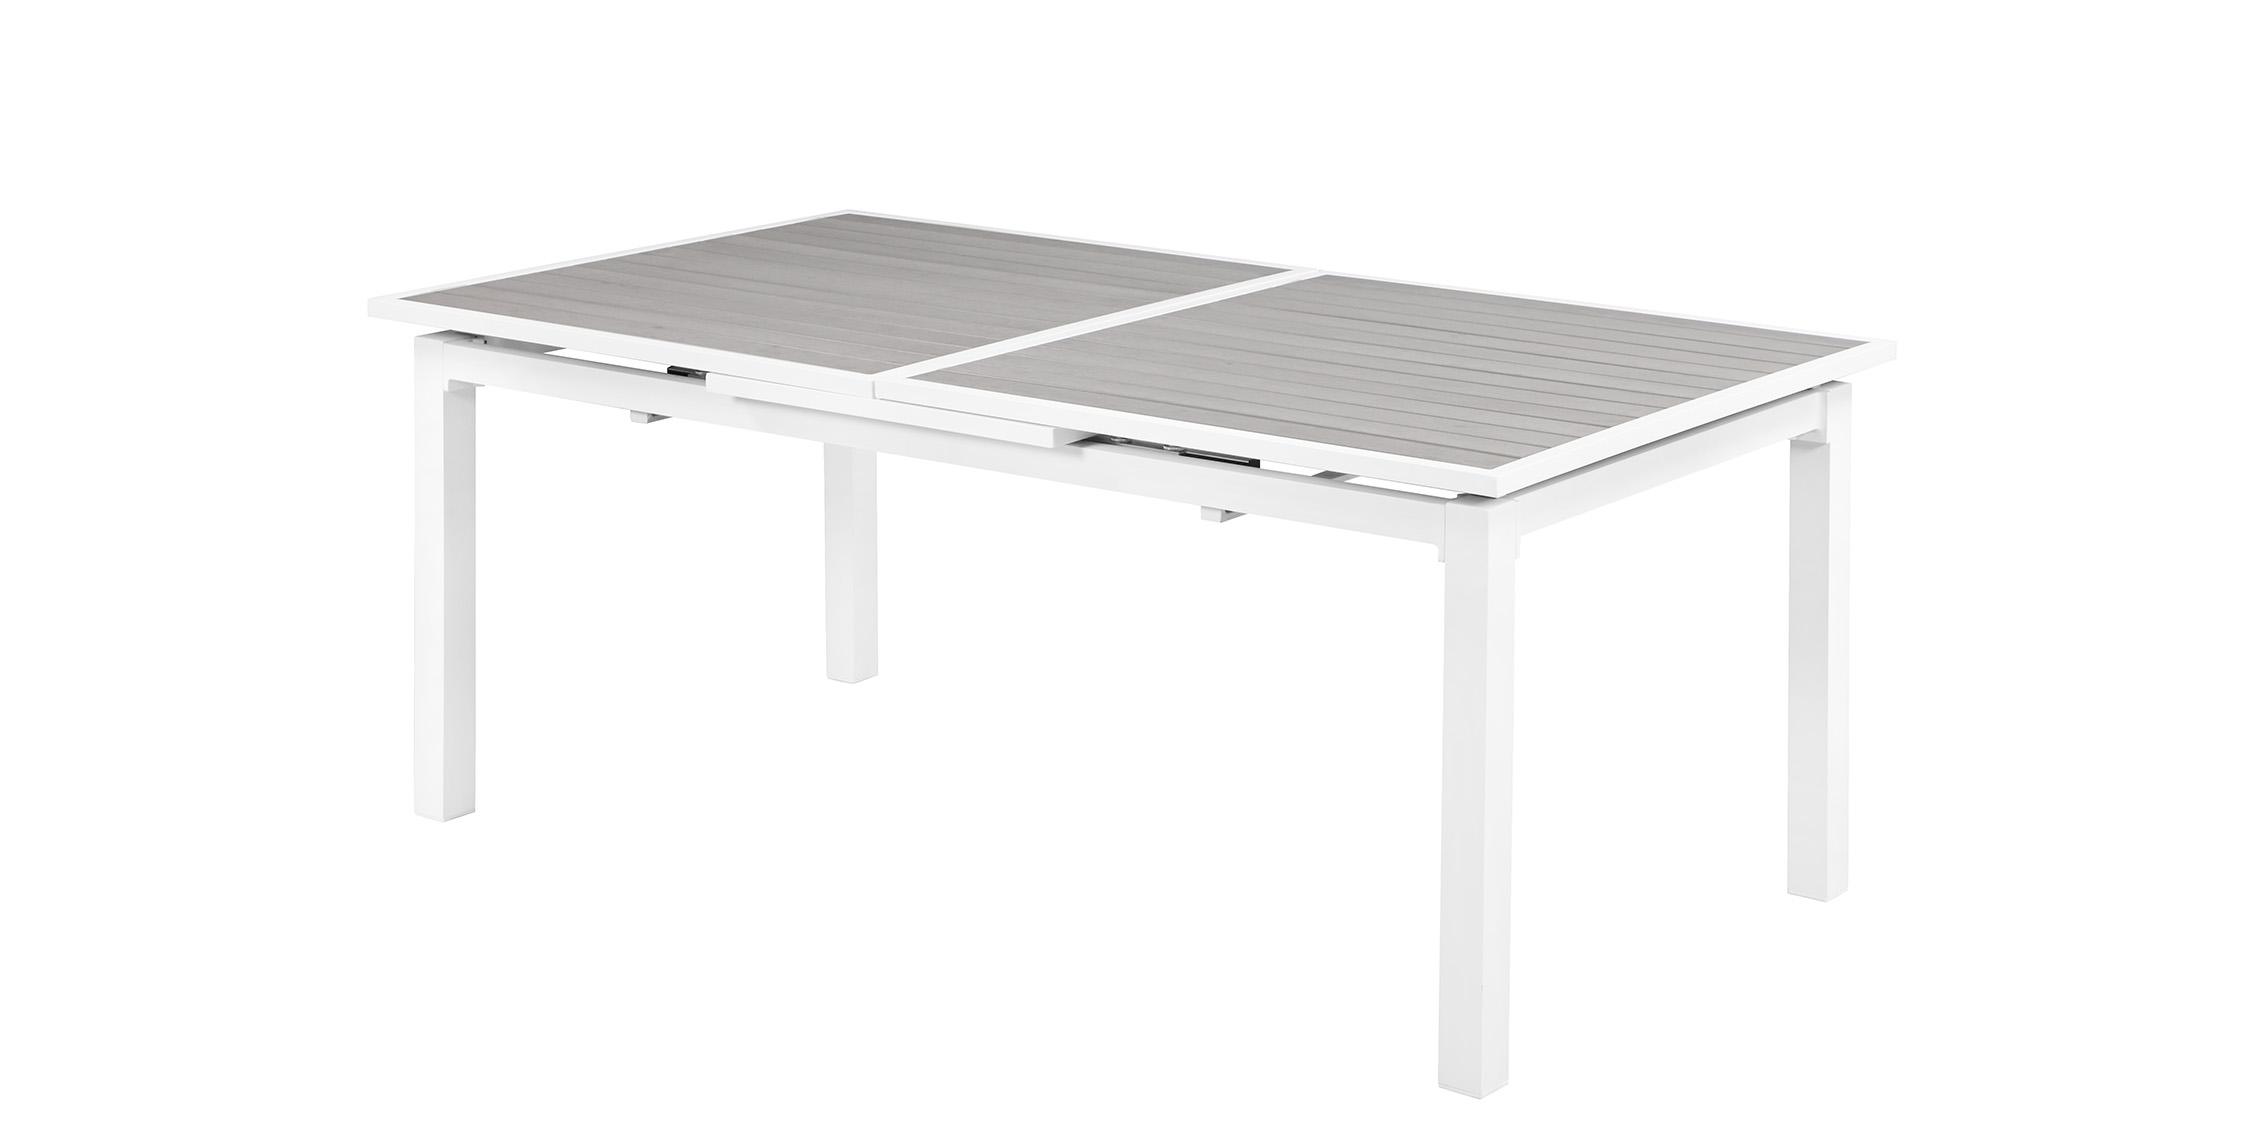 Contemporary Patio Dining Table NIZUC 366-T 366-T in White, Gray 